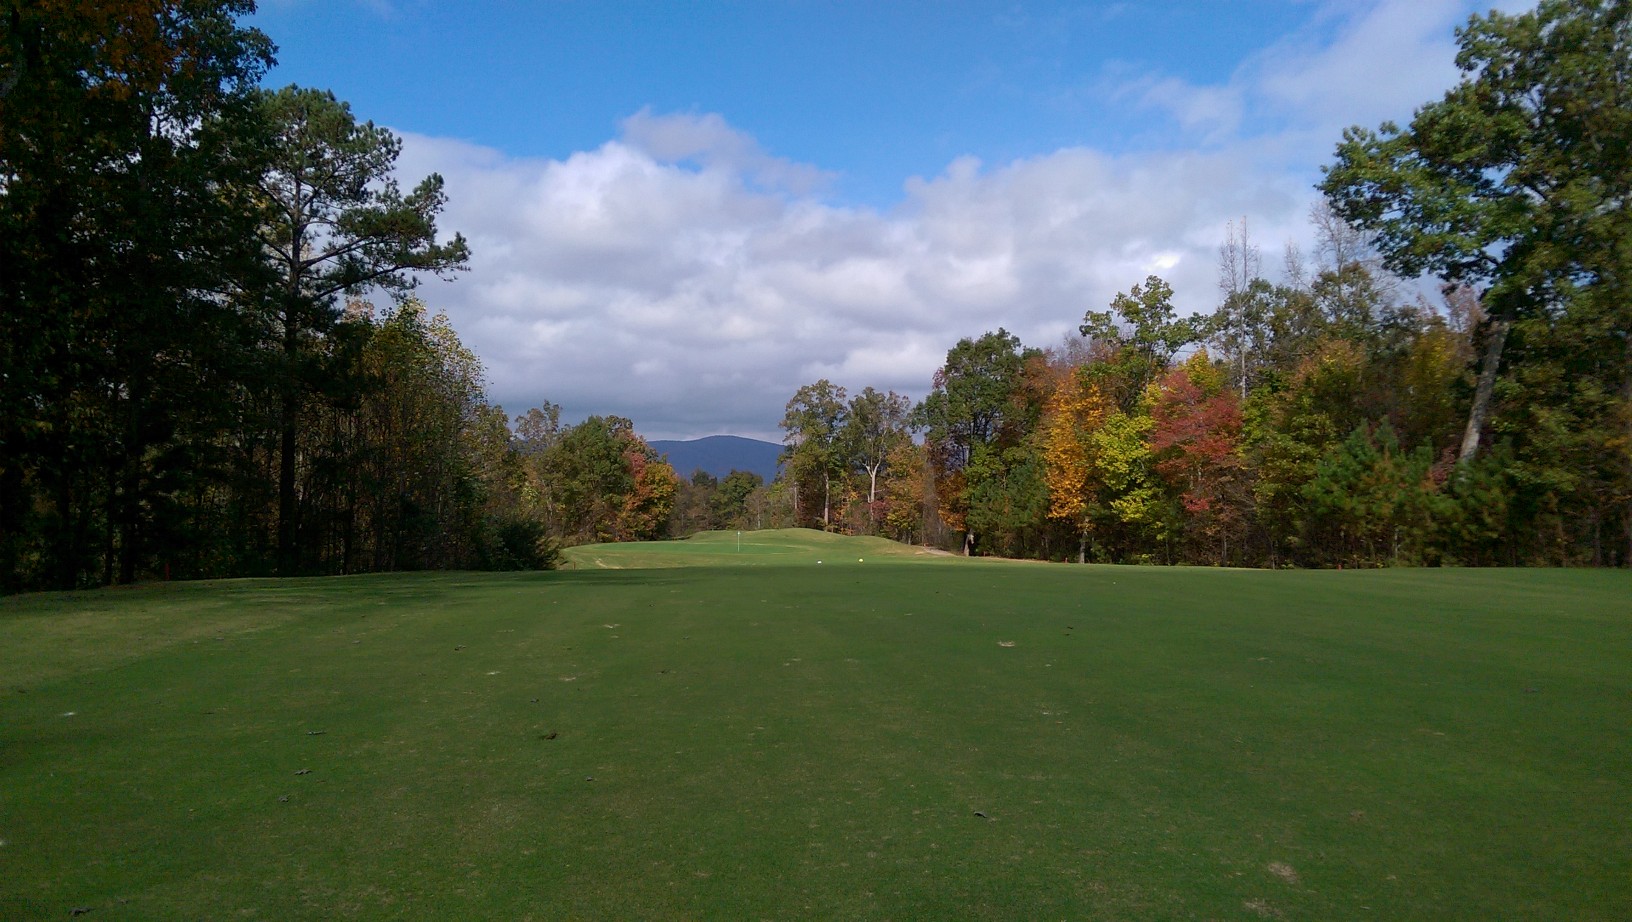 Cider Ridge Golf Club